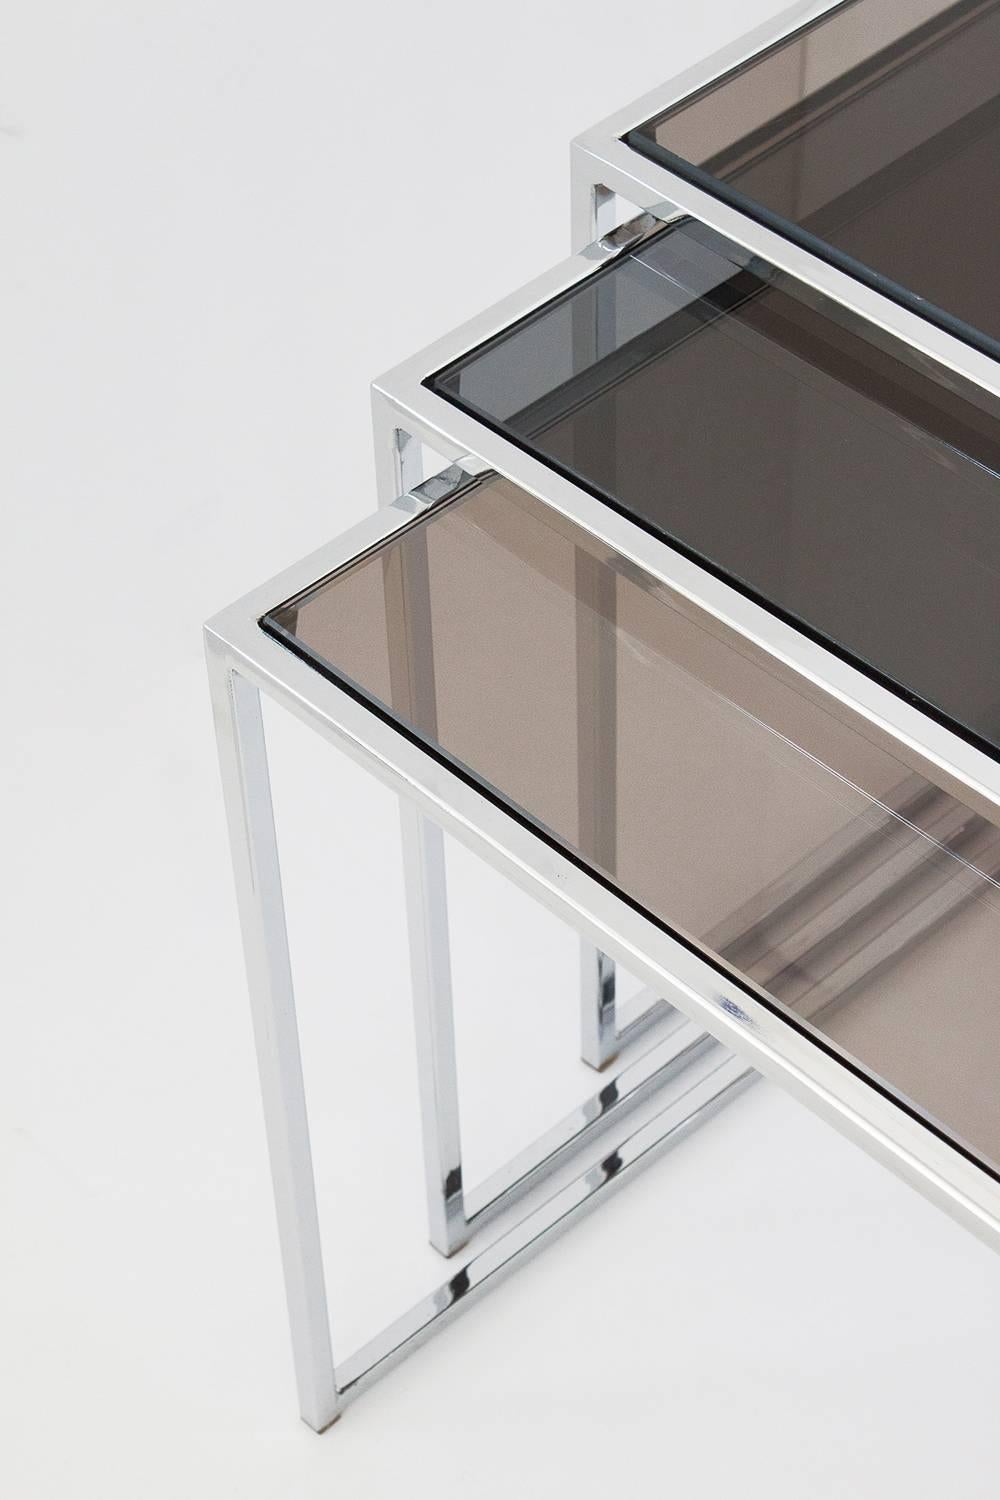 American Set of Milo Baughman Chrome and Smoked Glass Nesting Tables